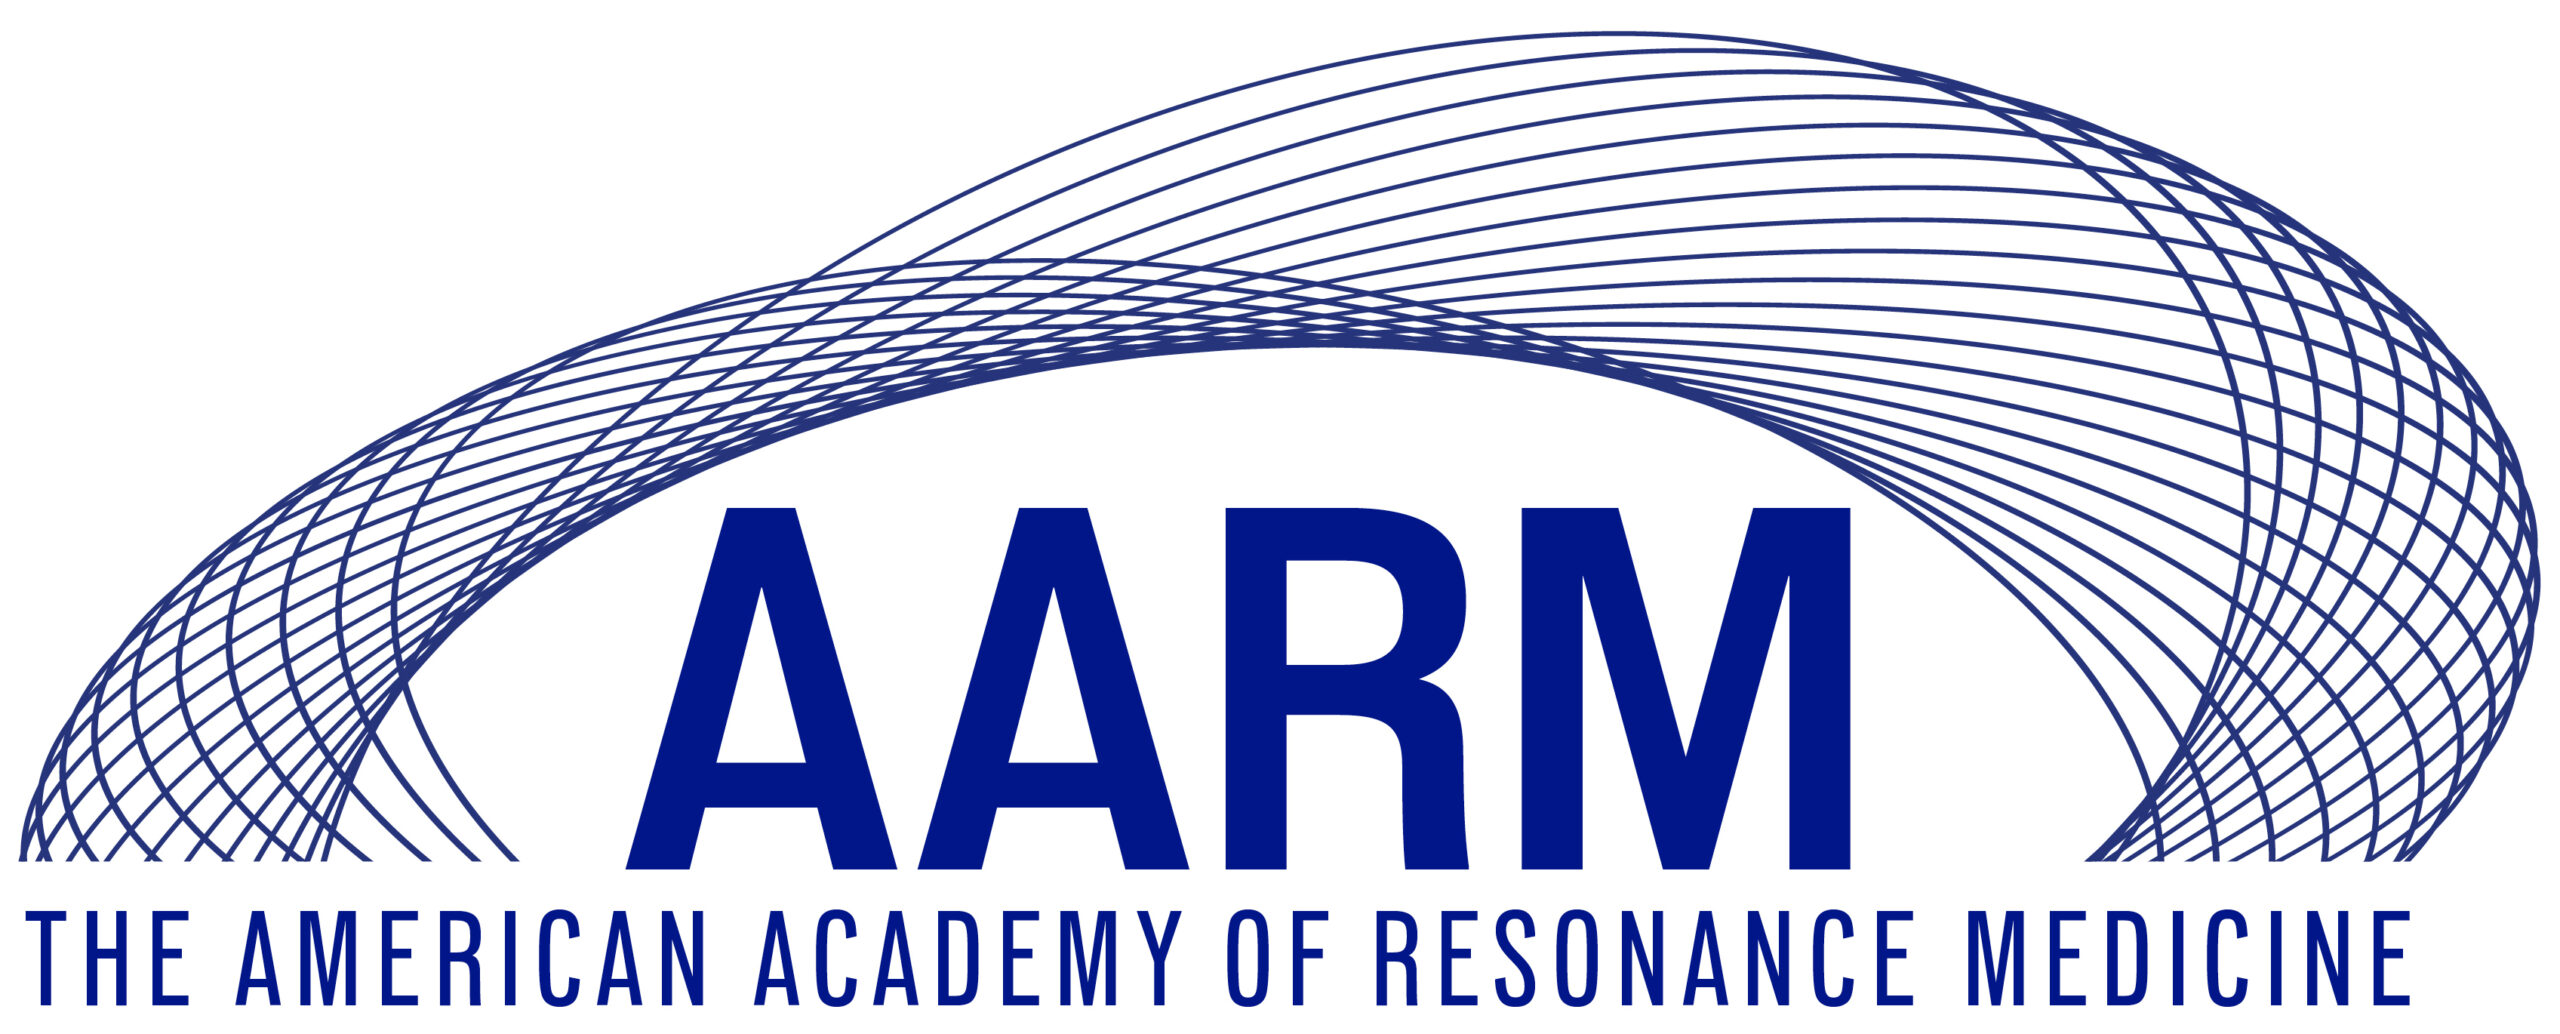 The American Academy of Resonance Medicine Logo Final